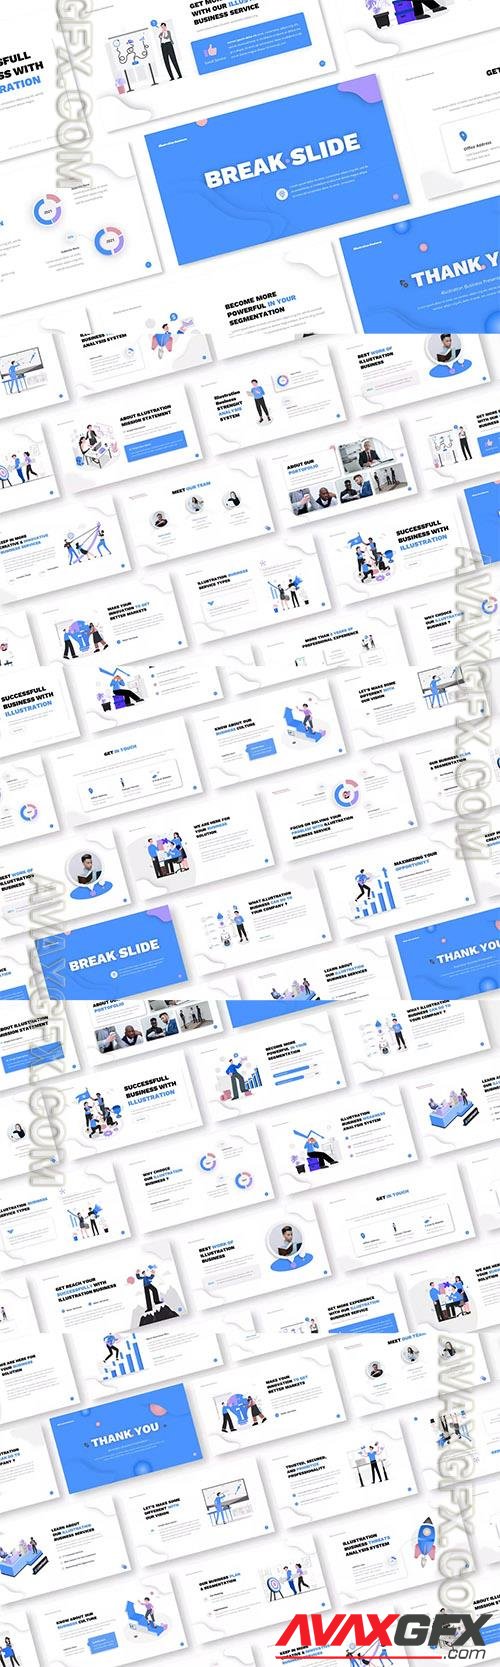 Illustration Business Powerpoint, Keynote and Google Slides Presentations